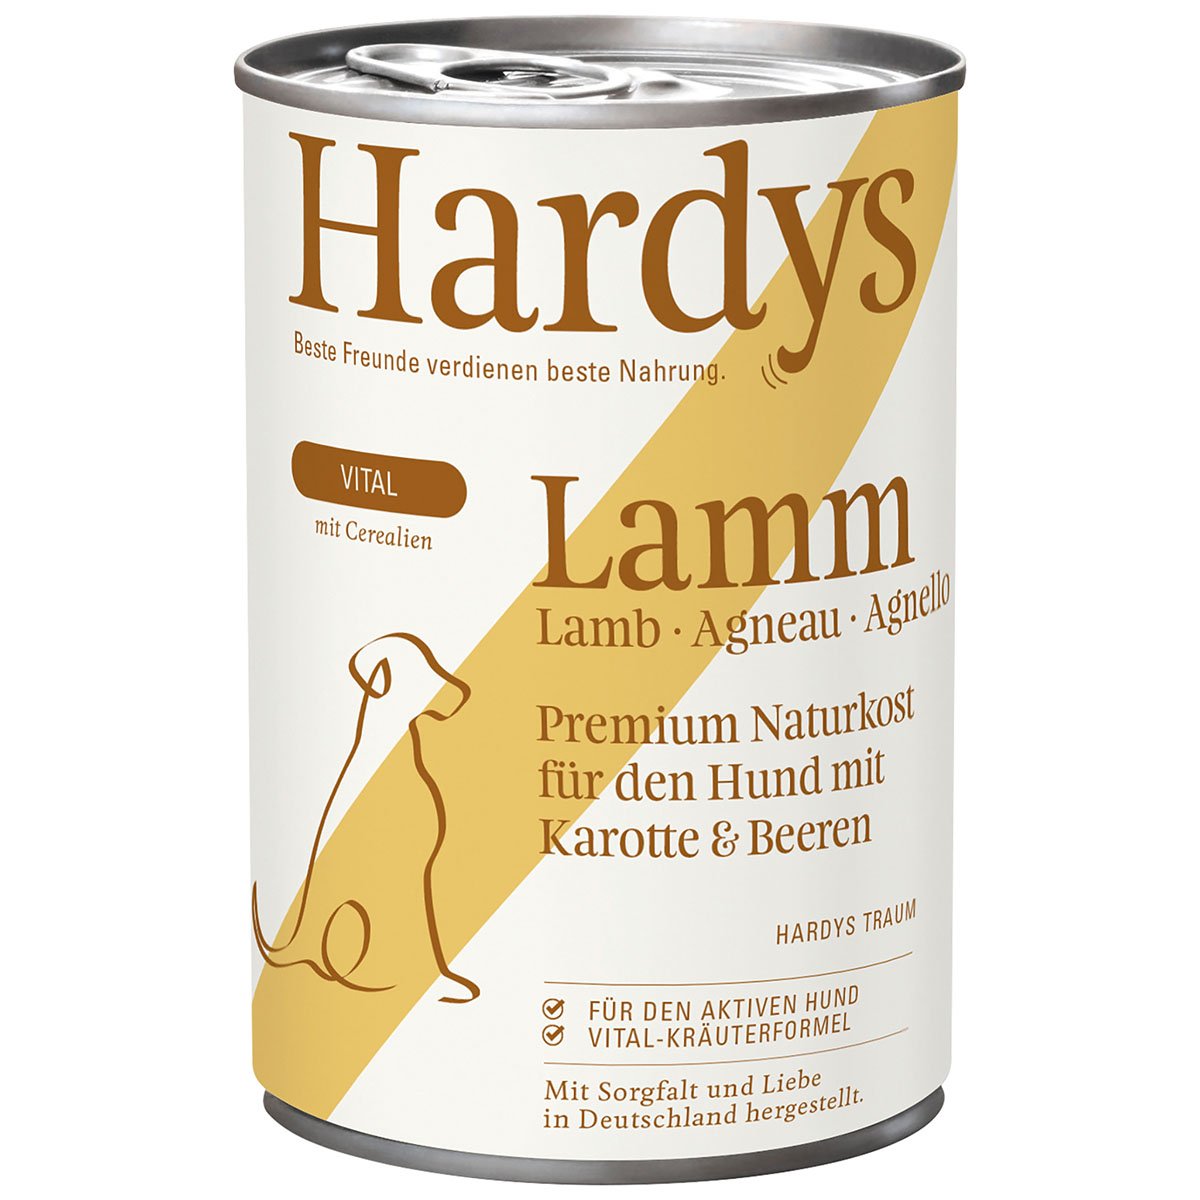 Hardys VITAL Lamm mit Karotte & Beeren 6x400g